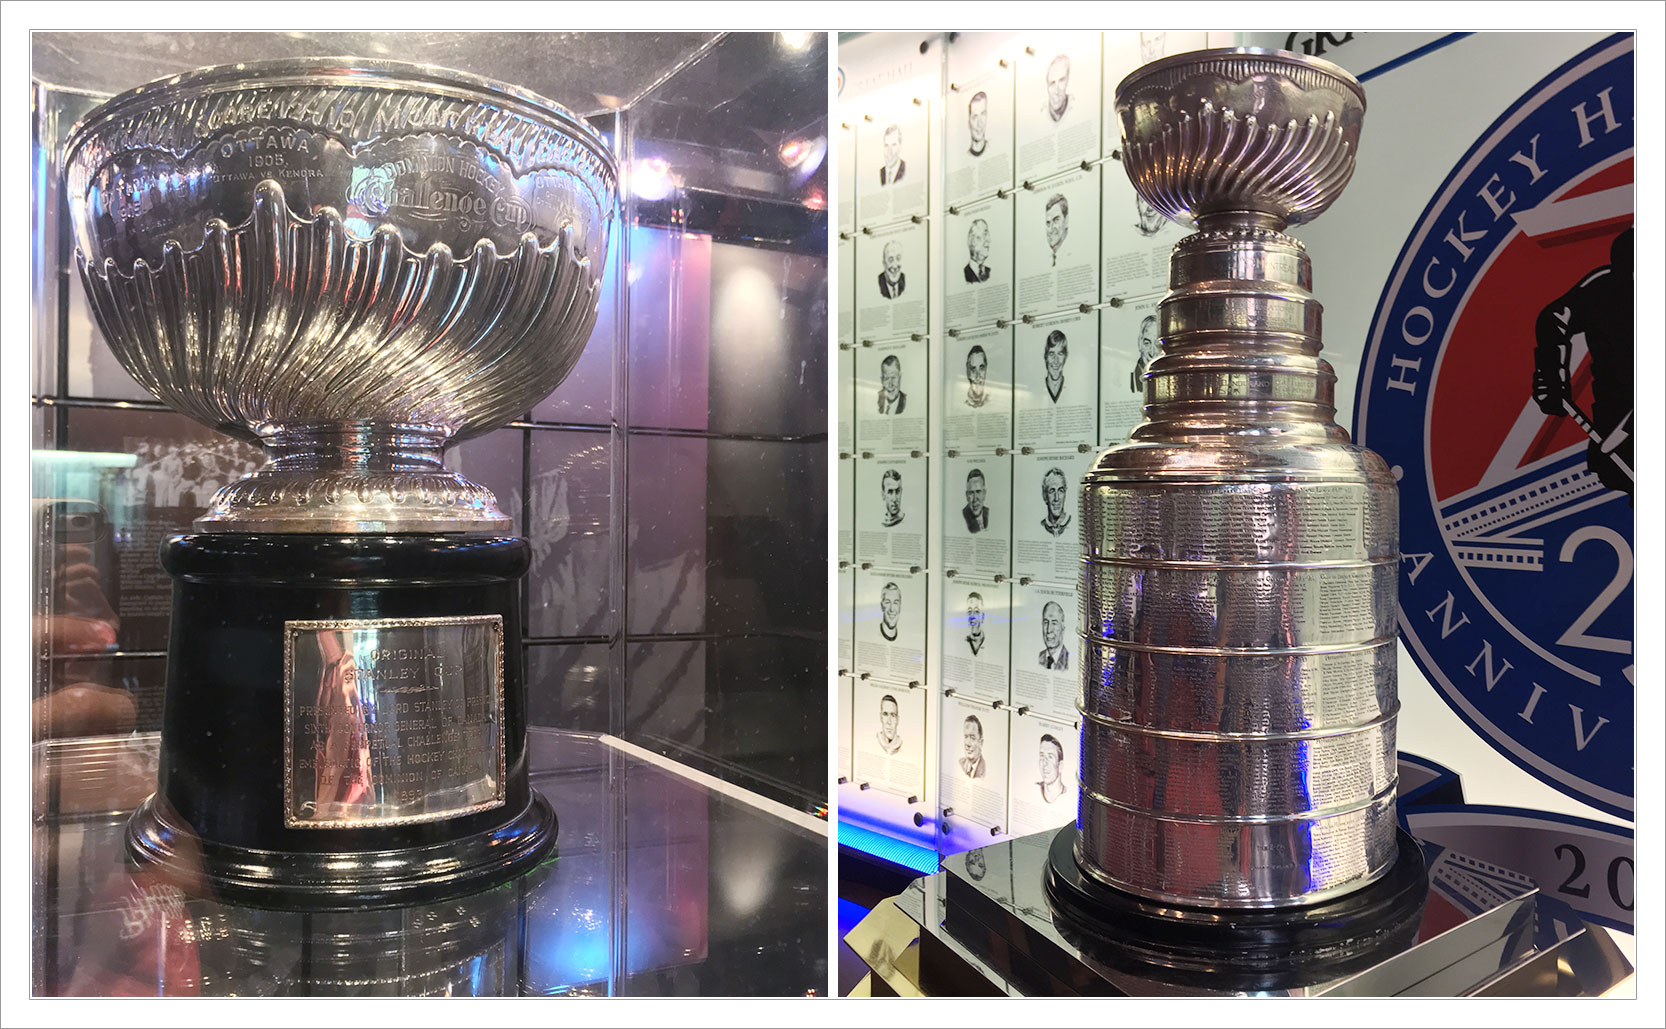 Stanley Cup Replica Trophy - Ampros Awards